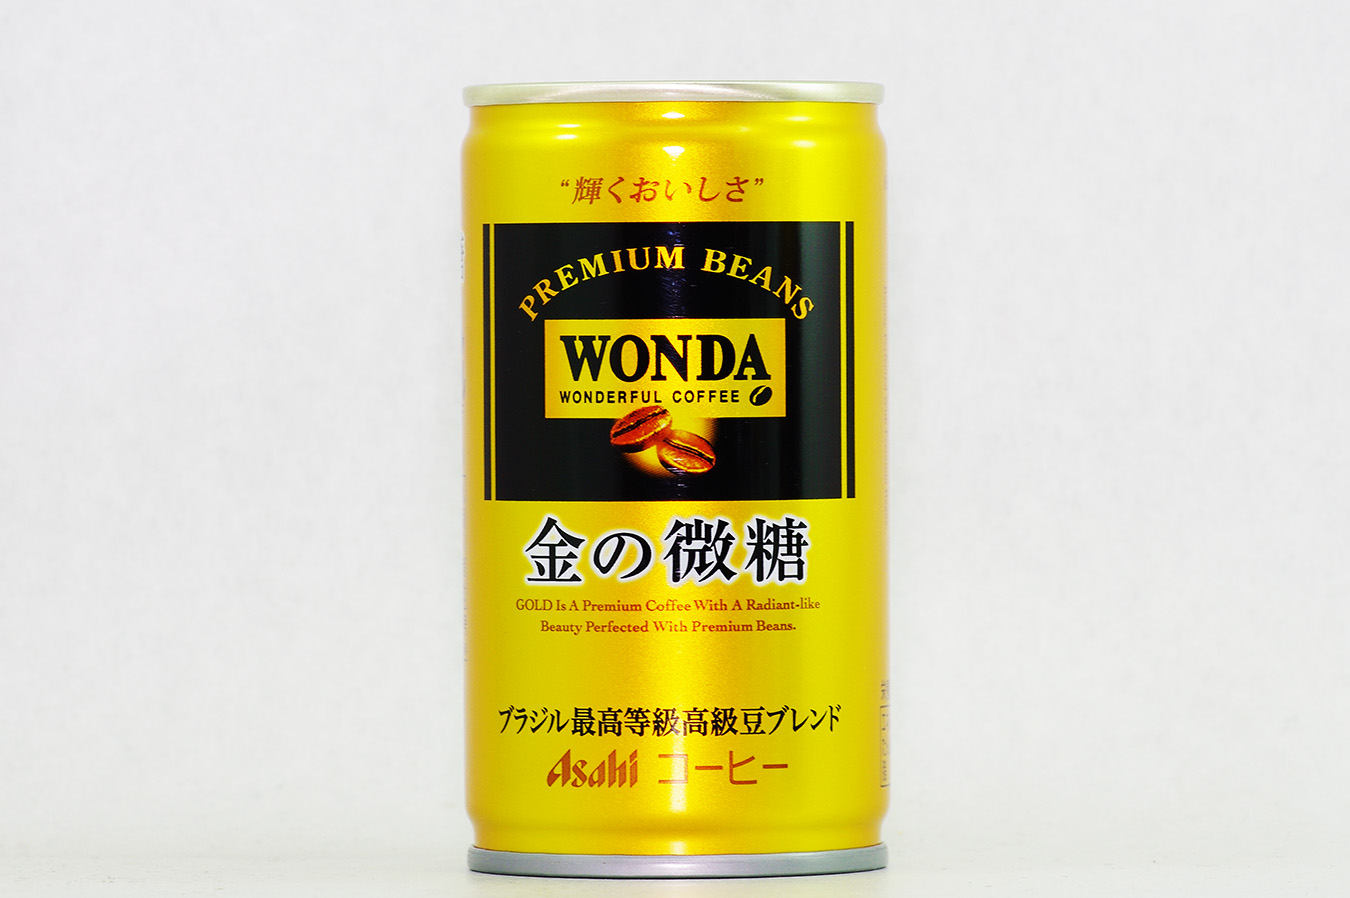 WONDA 金の微糖 165g缶 2016年5月